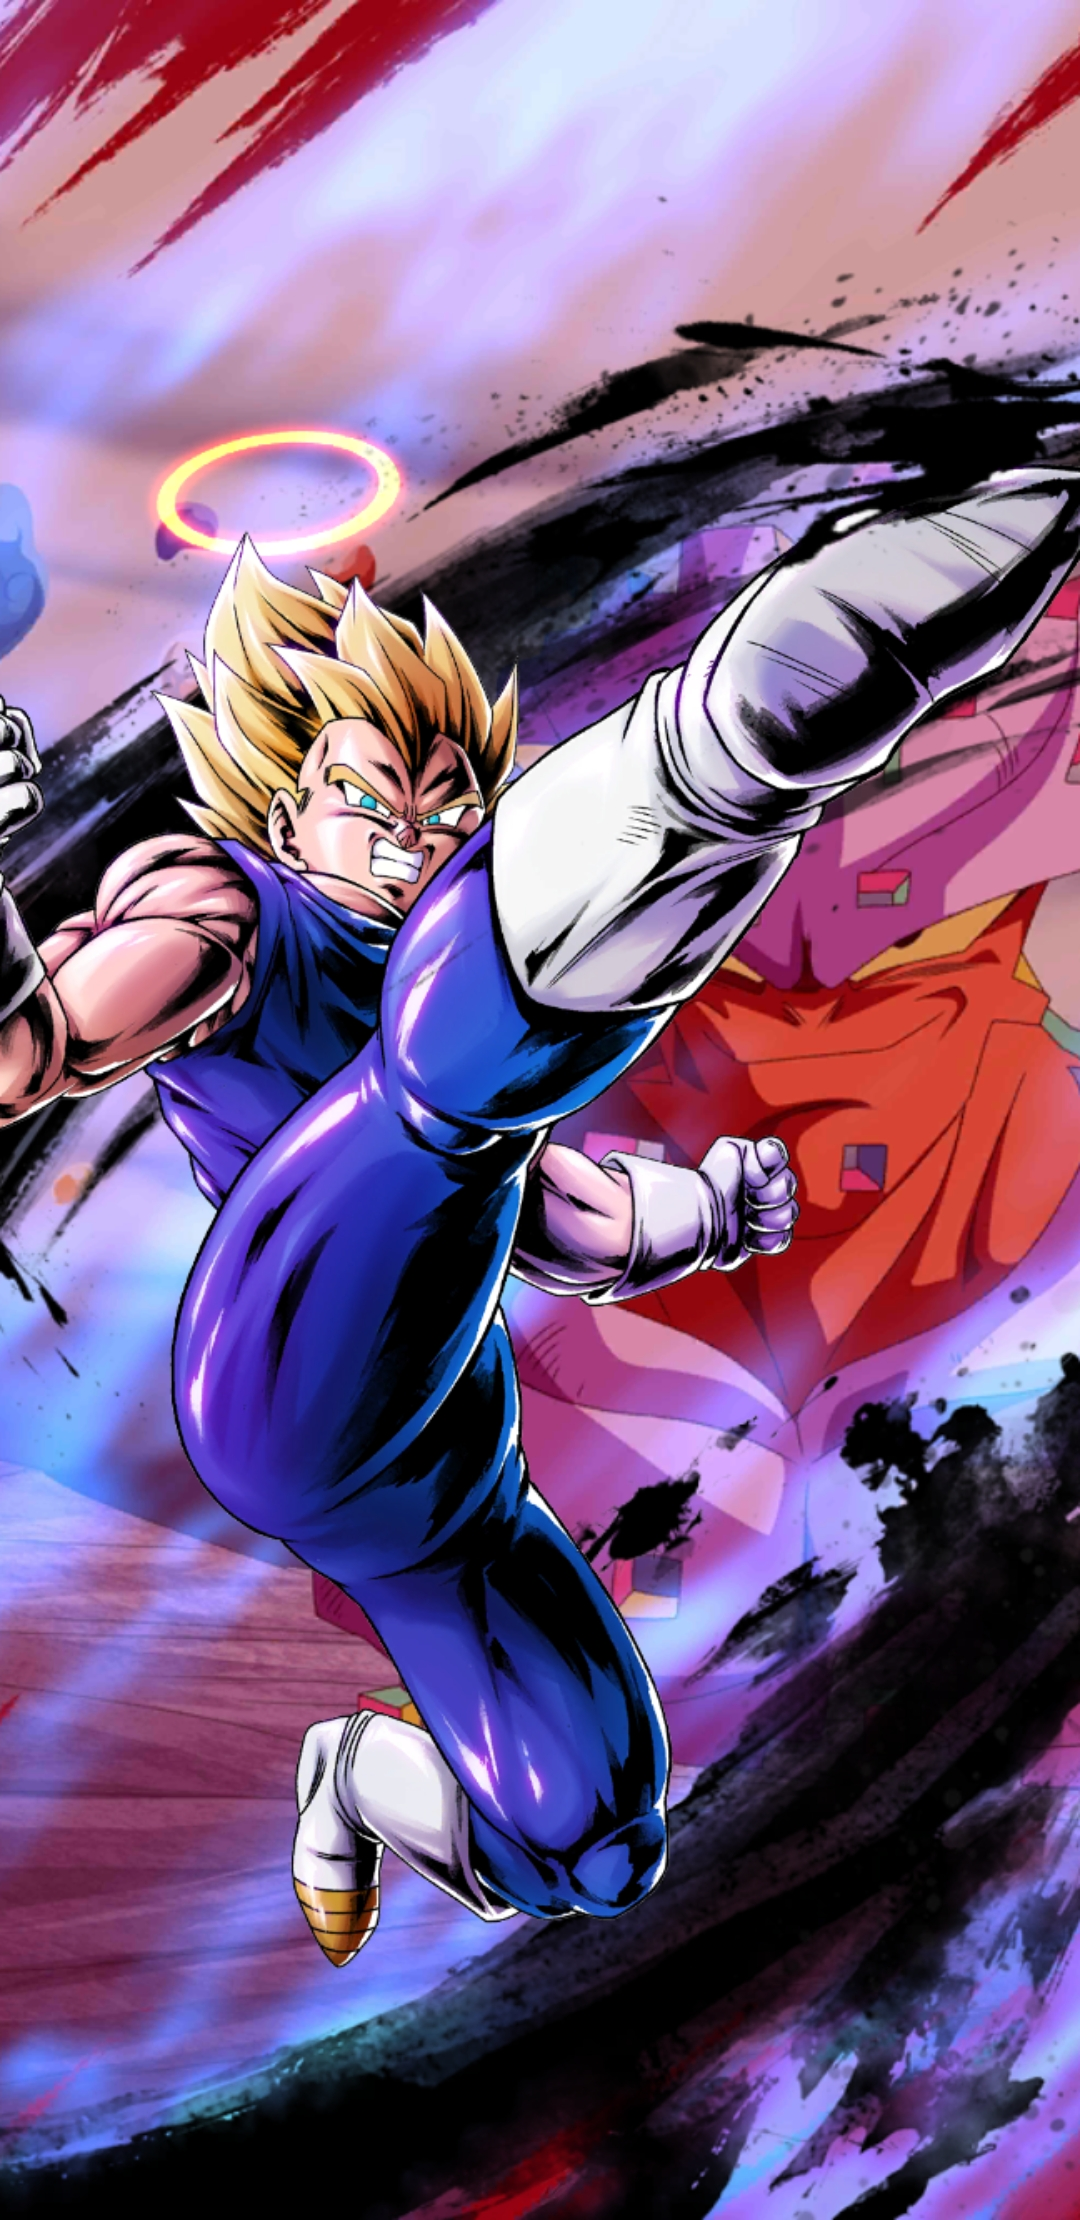 SP Super Saiyan 2 Vegeta (Purple)  Dragon Ball Legends Wiki - GamePress